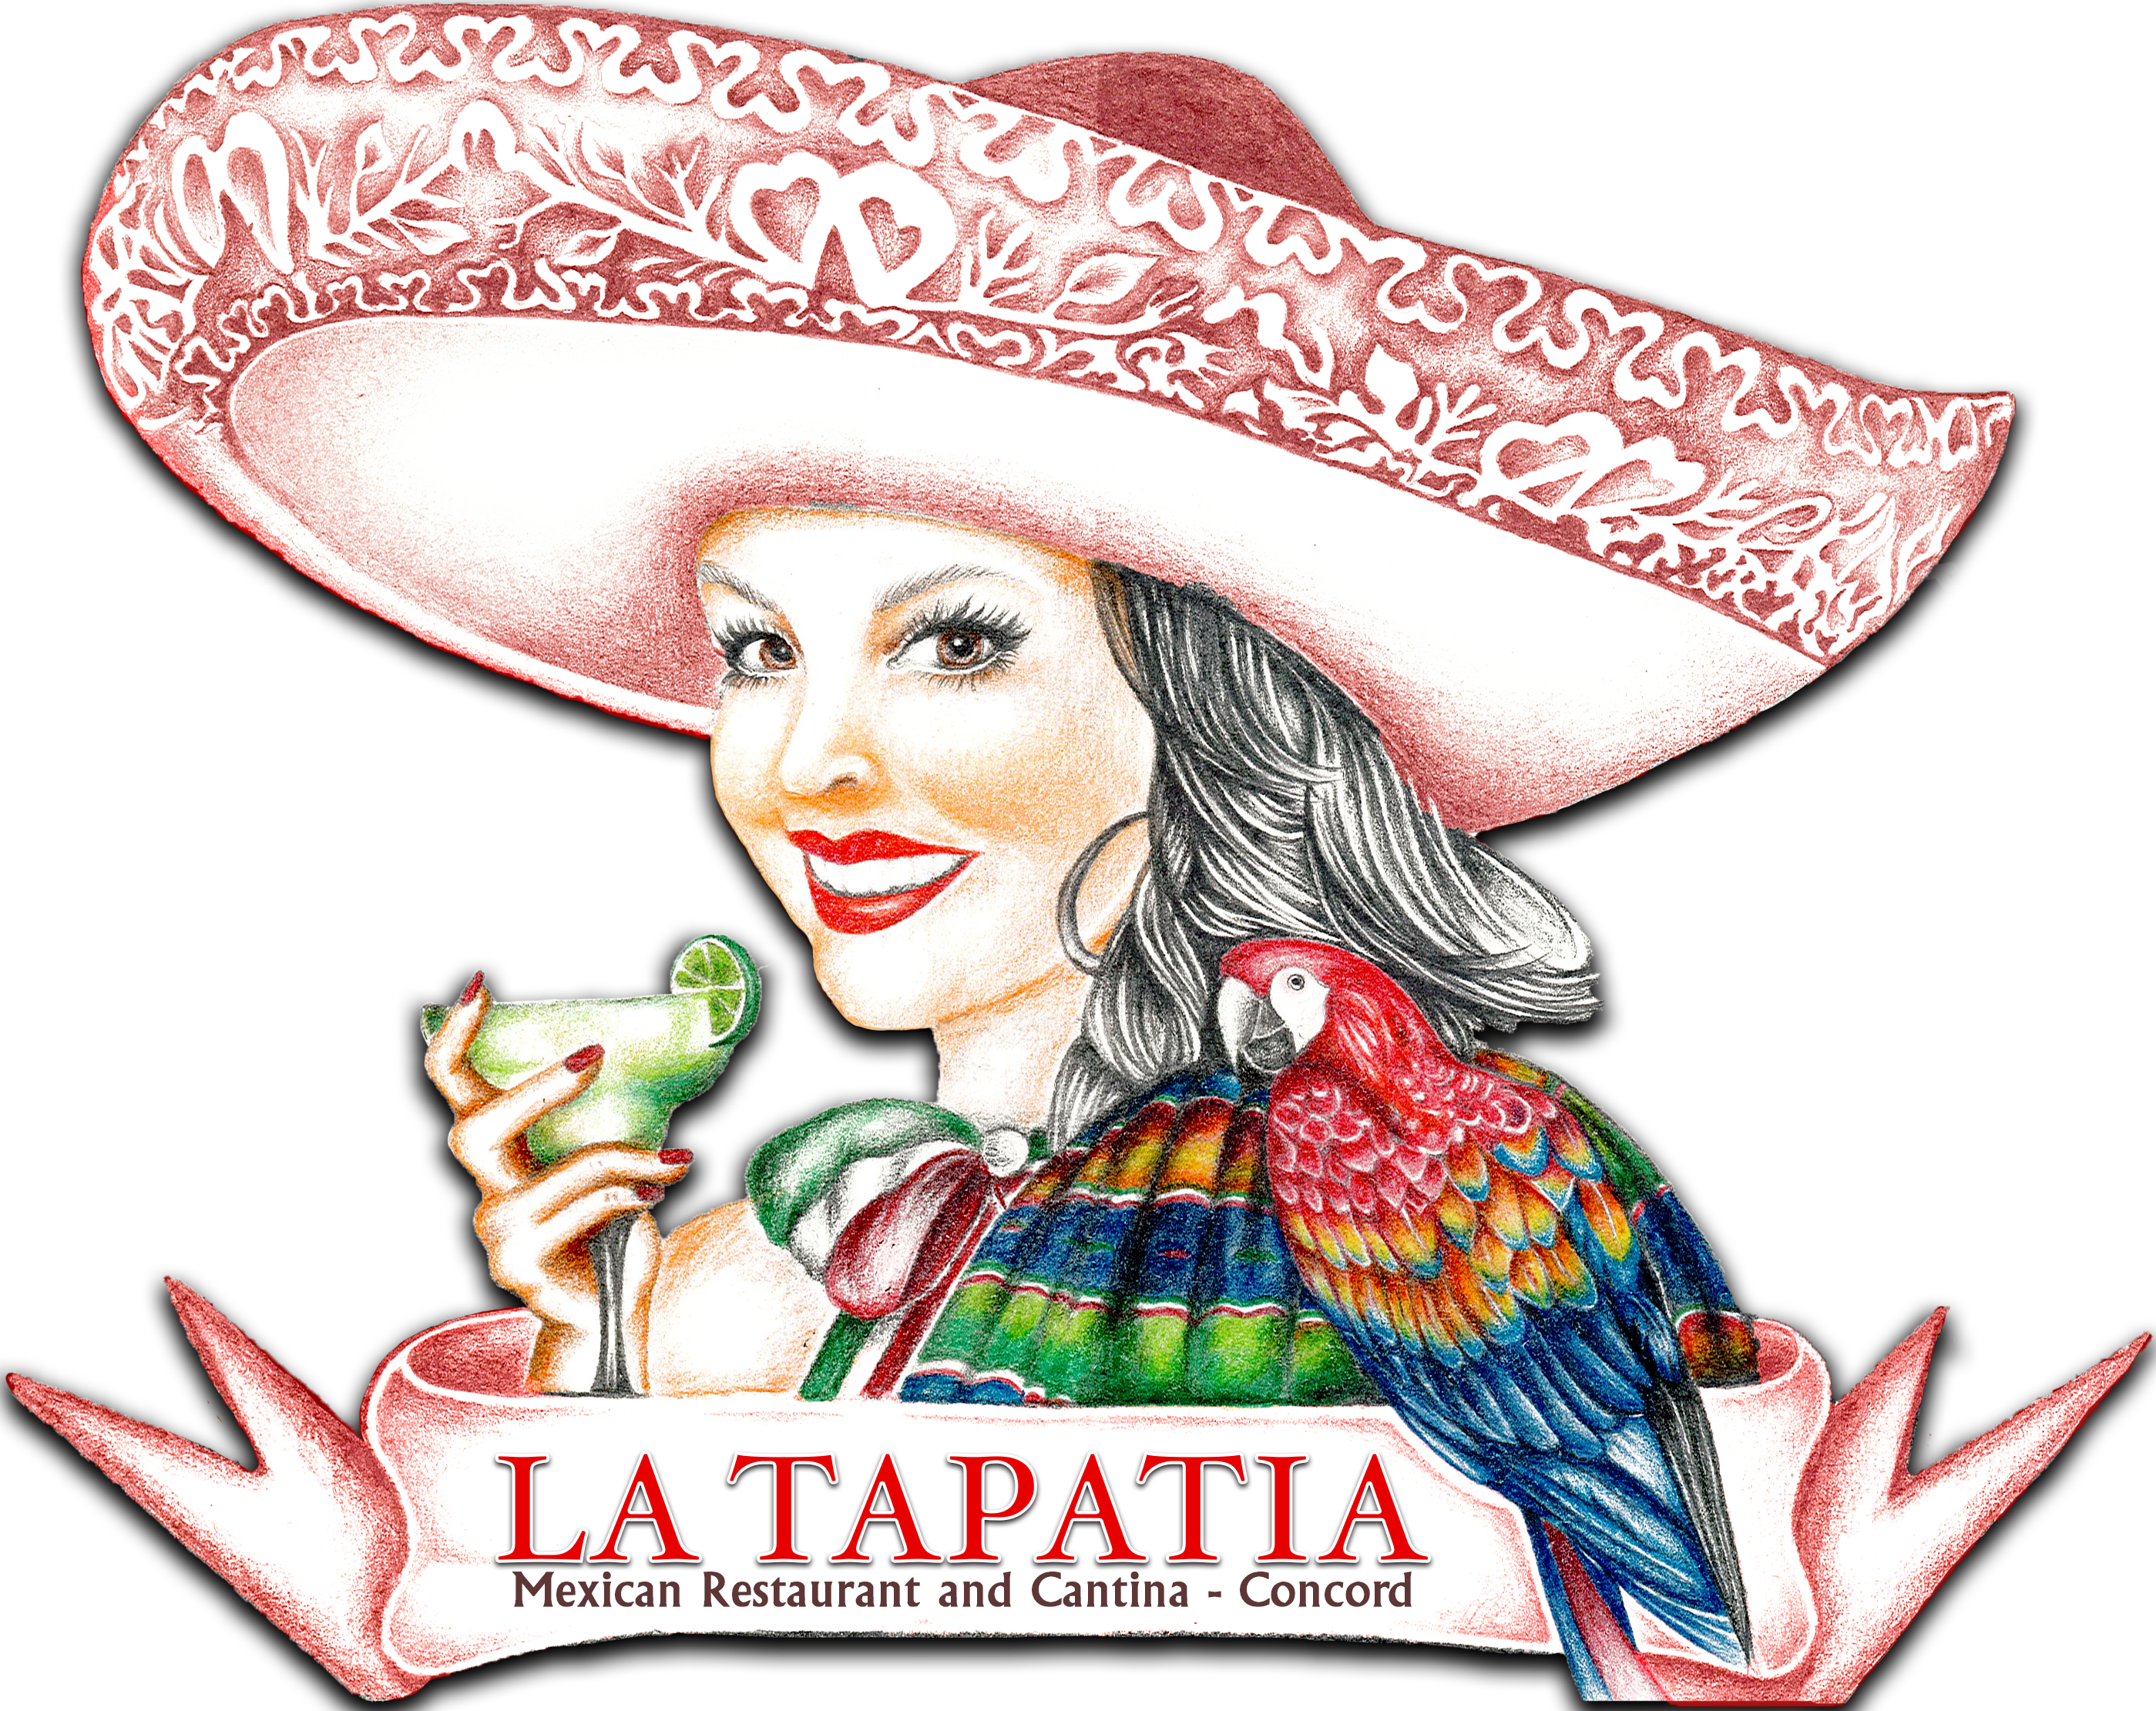 La Tapatia Mexican Restaurant and Cantina in Concord